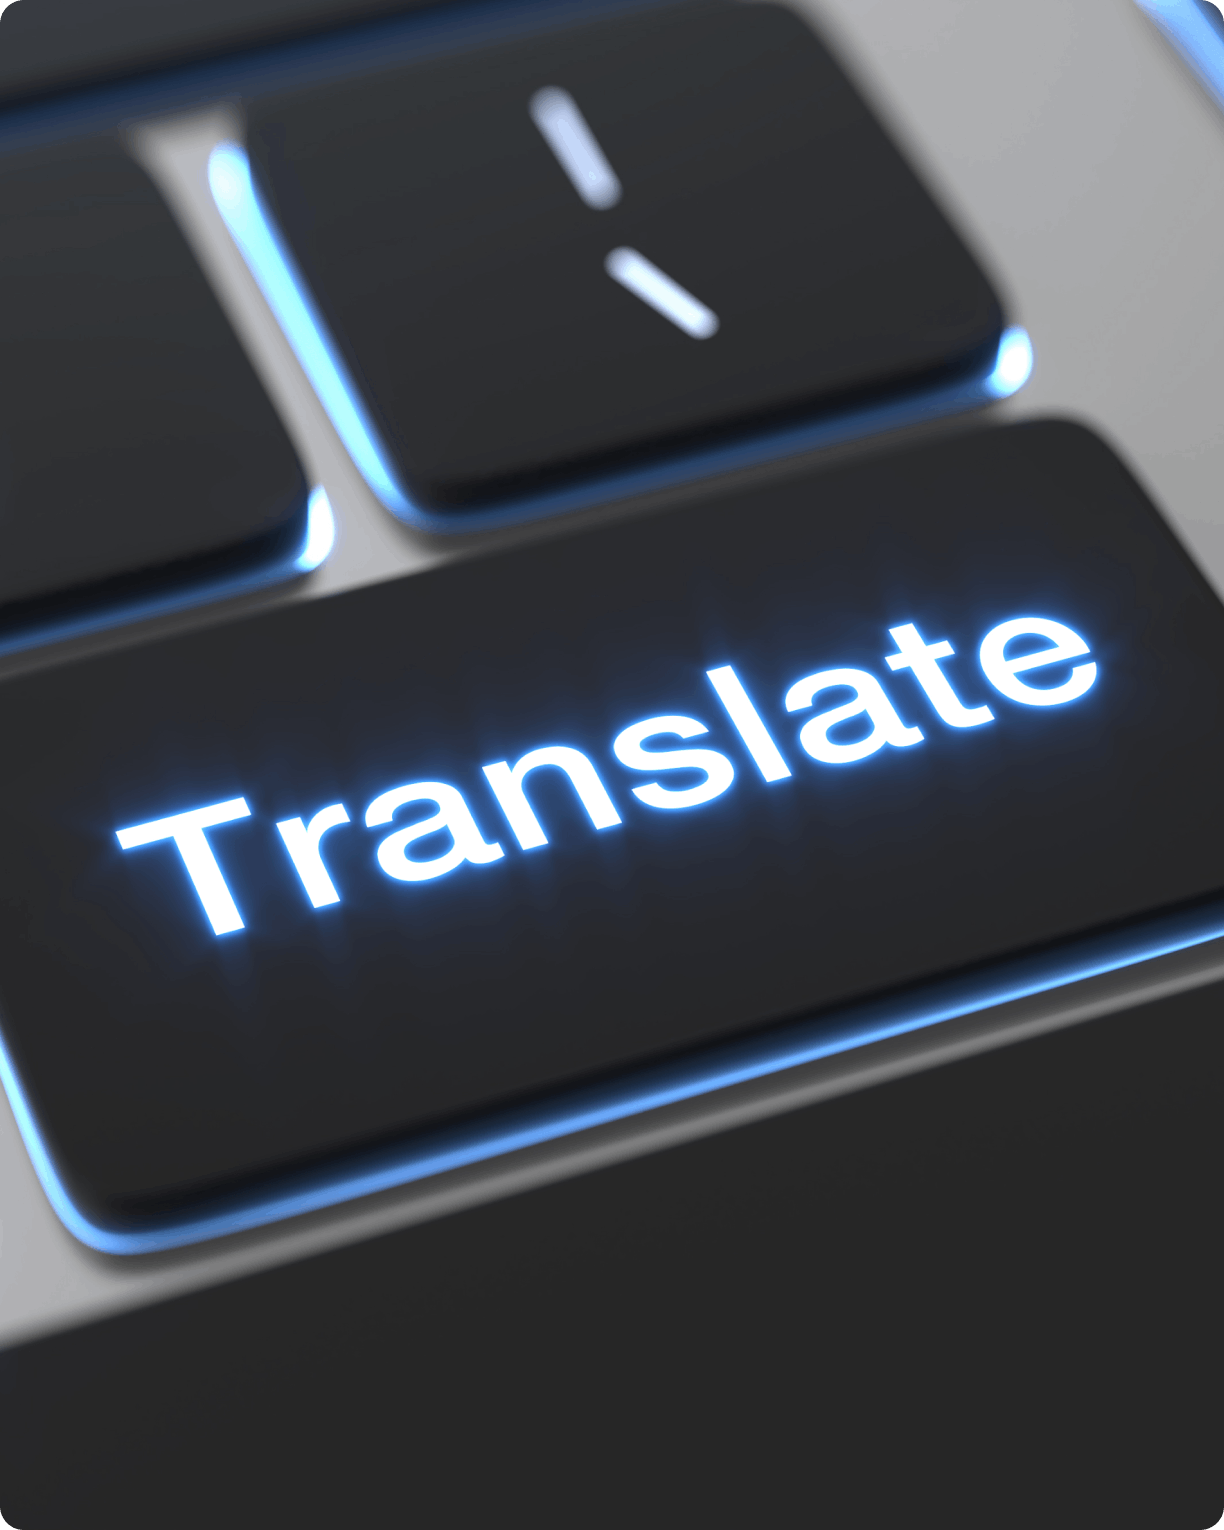 Localization and translation